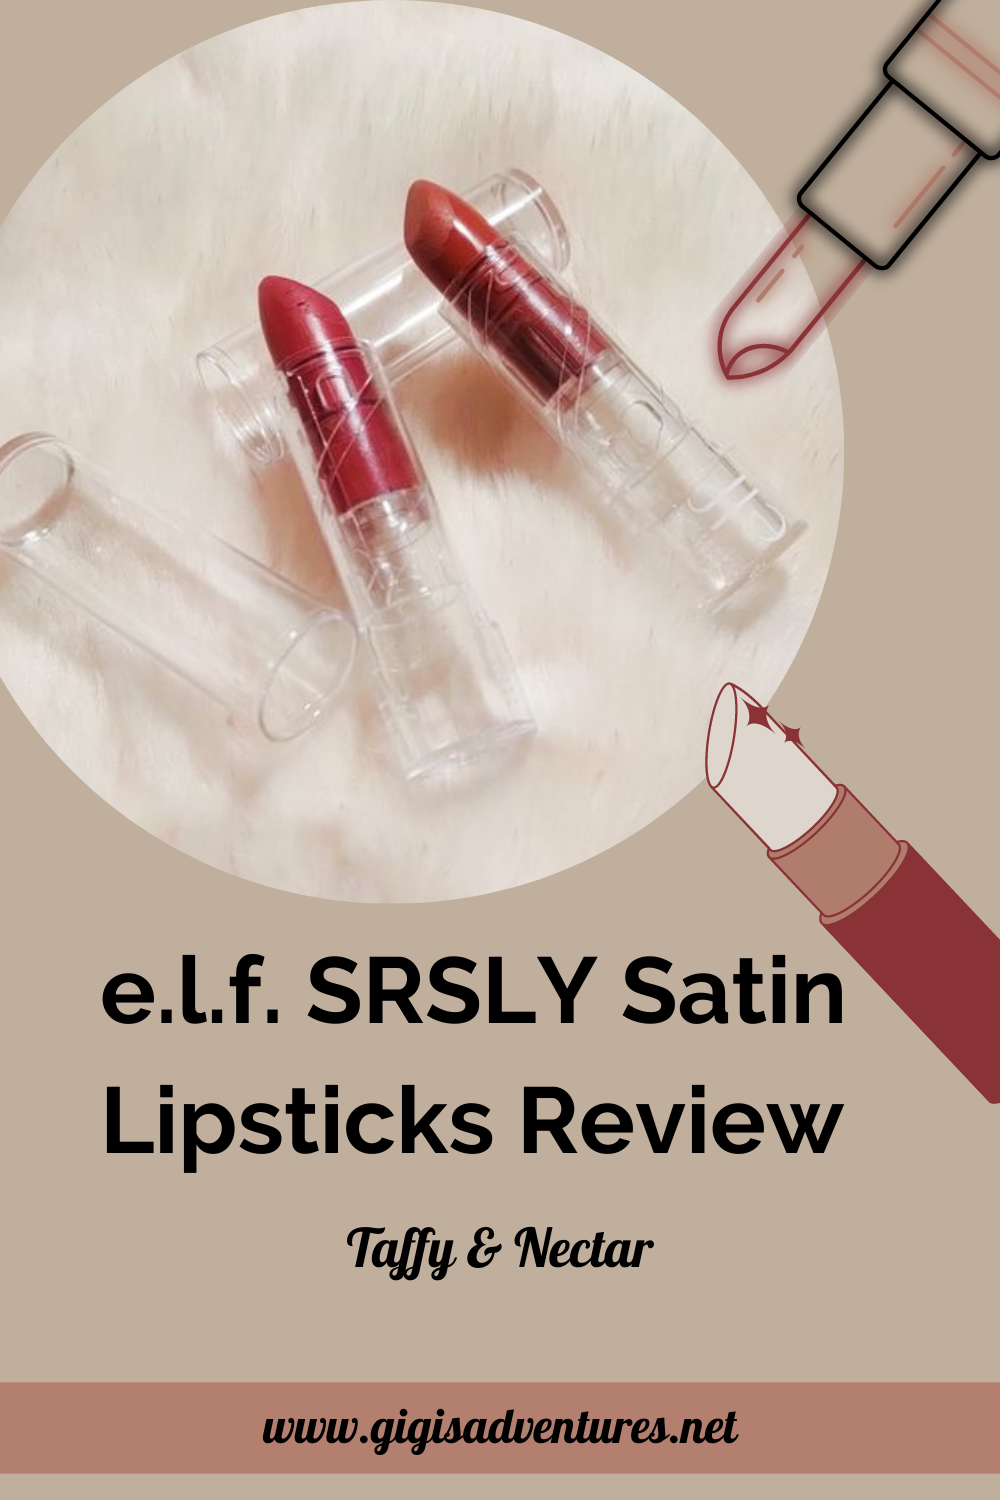 e.l.f. SRSLY Satin Lipsticks Review - Taffy and Nectar